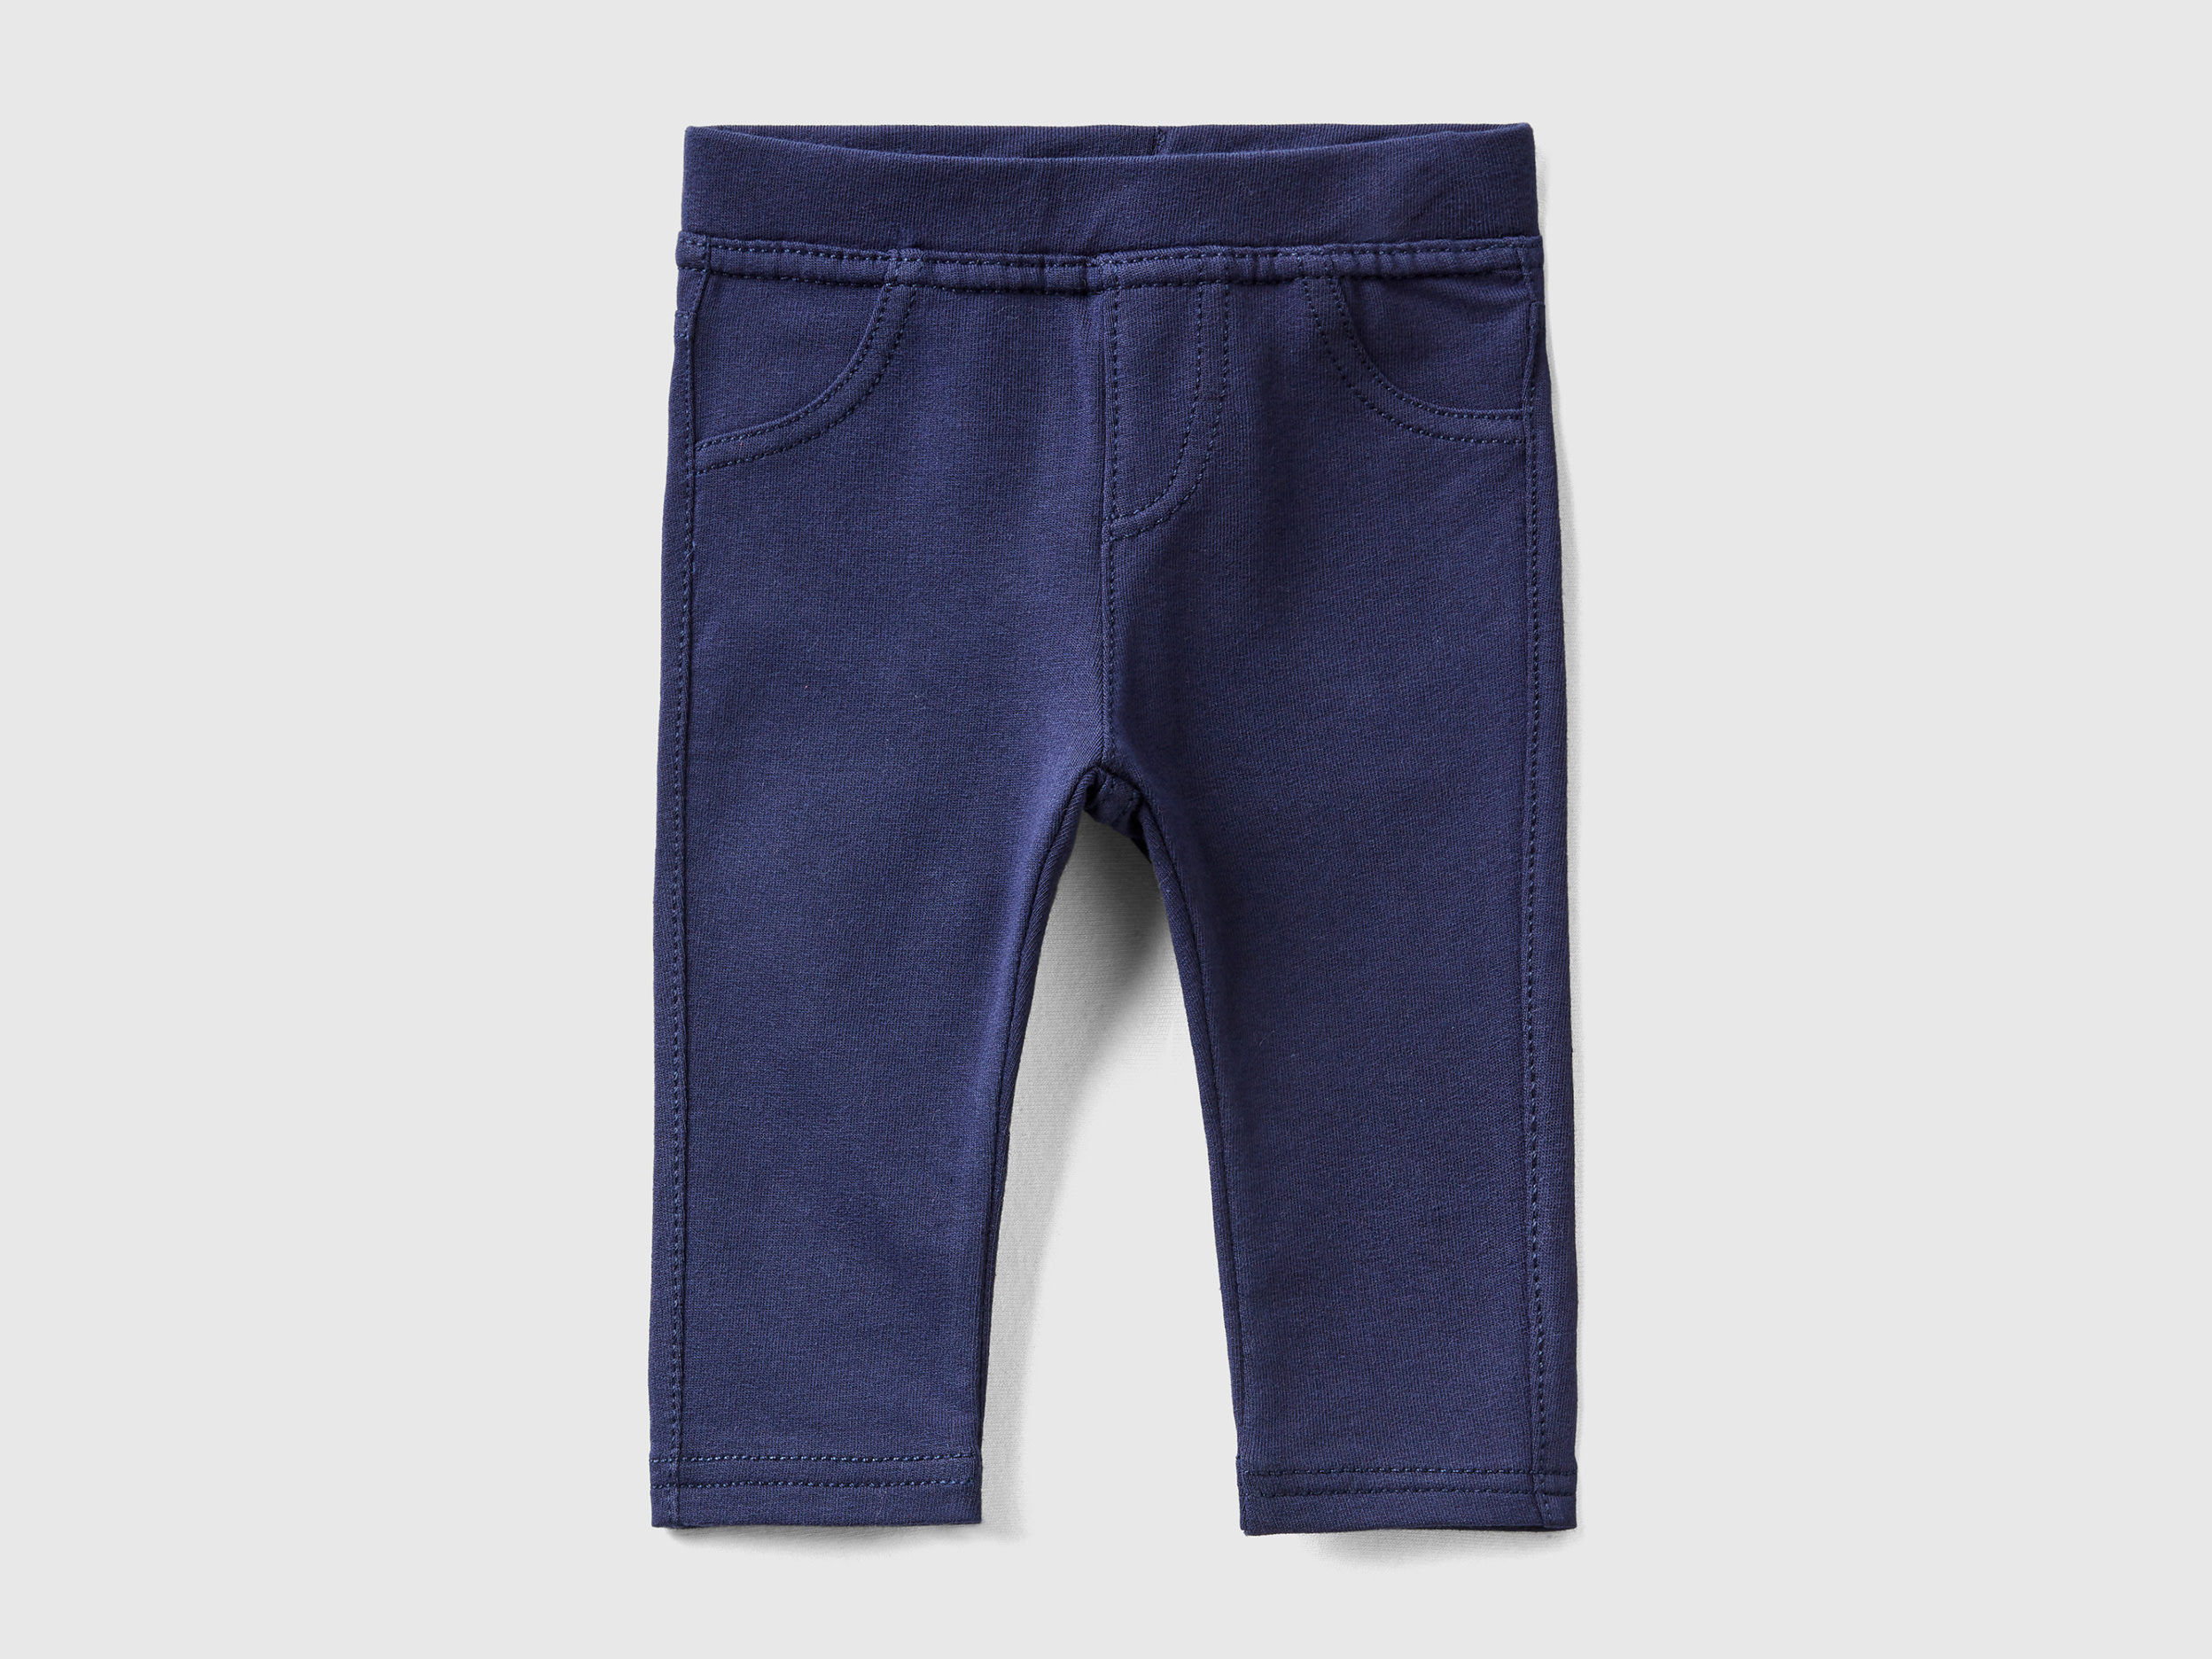 Benetton, Stretch Sweat Fabric Jeggings, size 3-6, Dark Blue, Kids